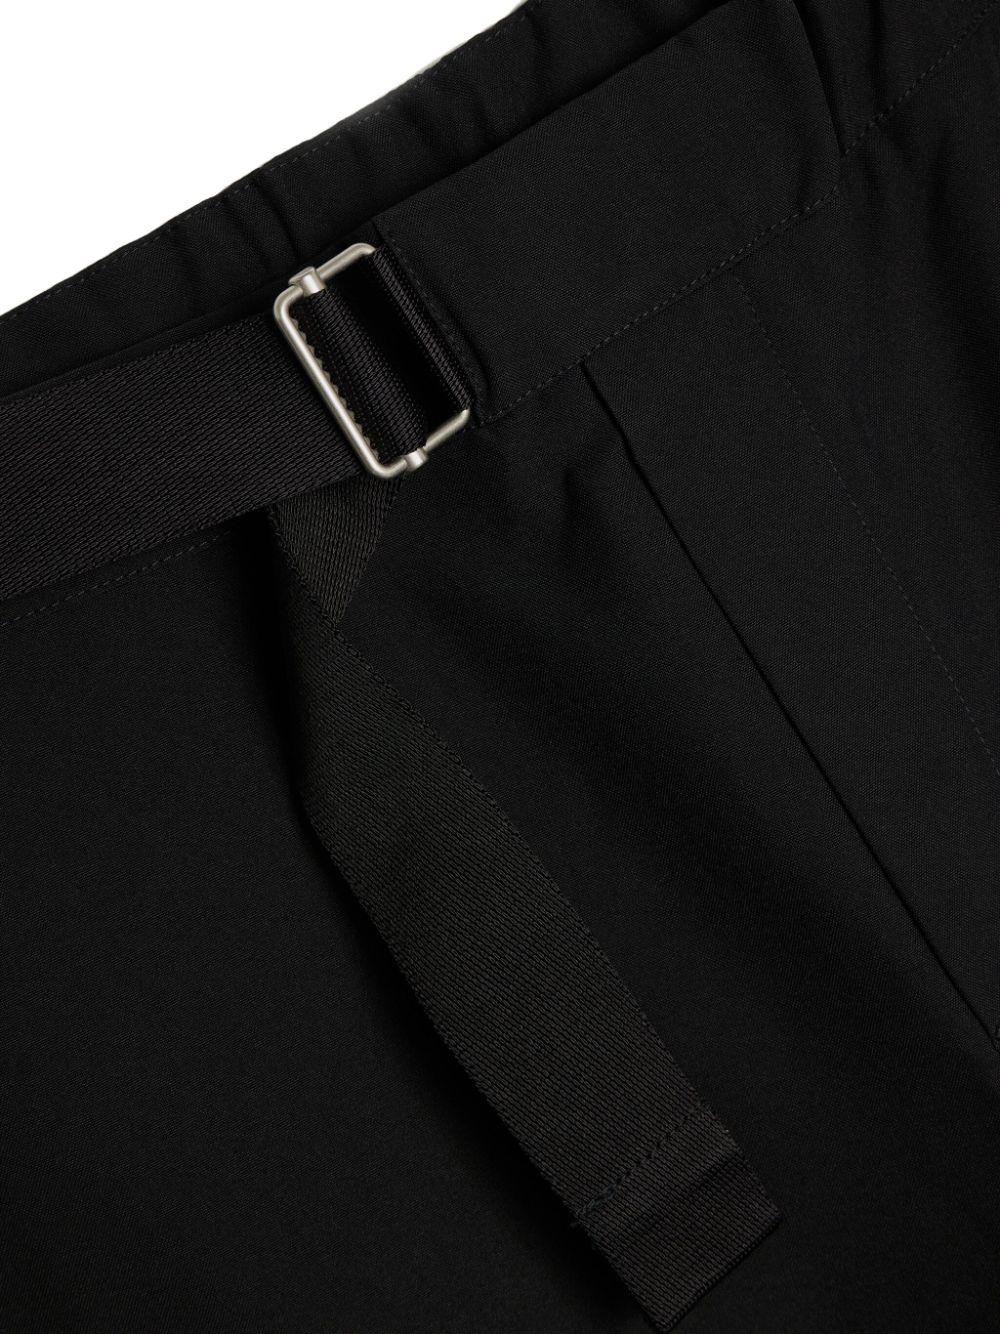 OAMC Cropped broek Zwart